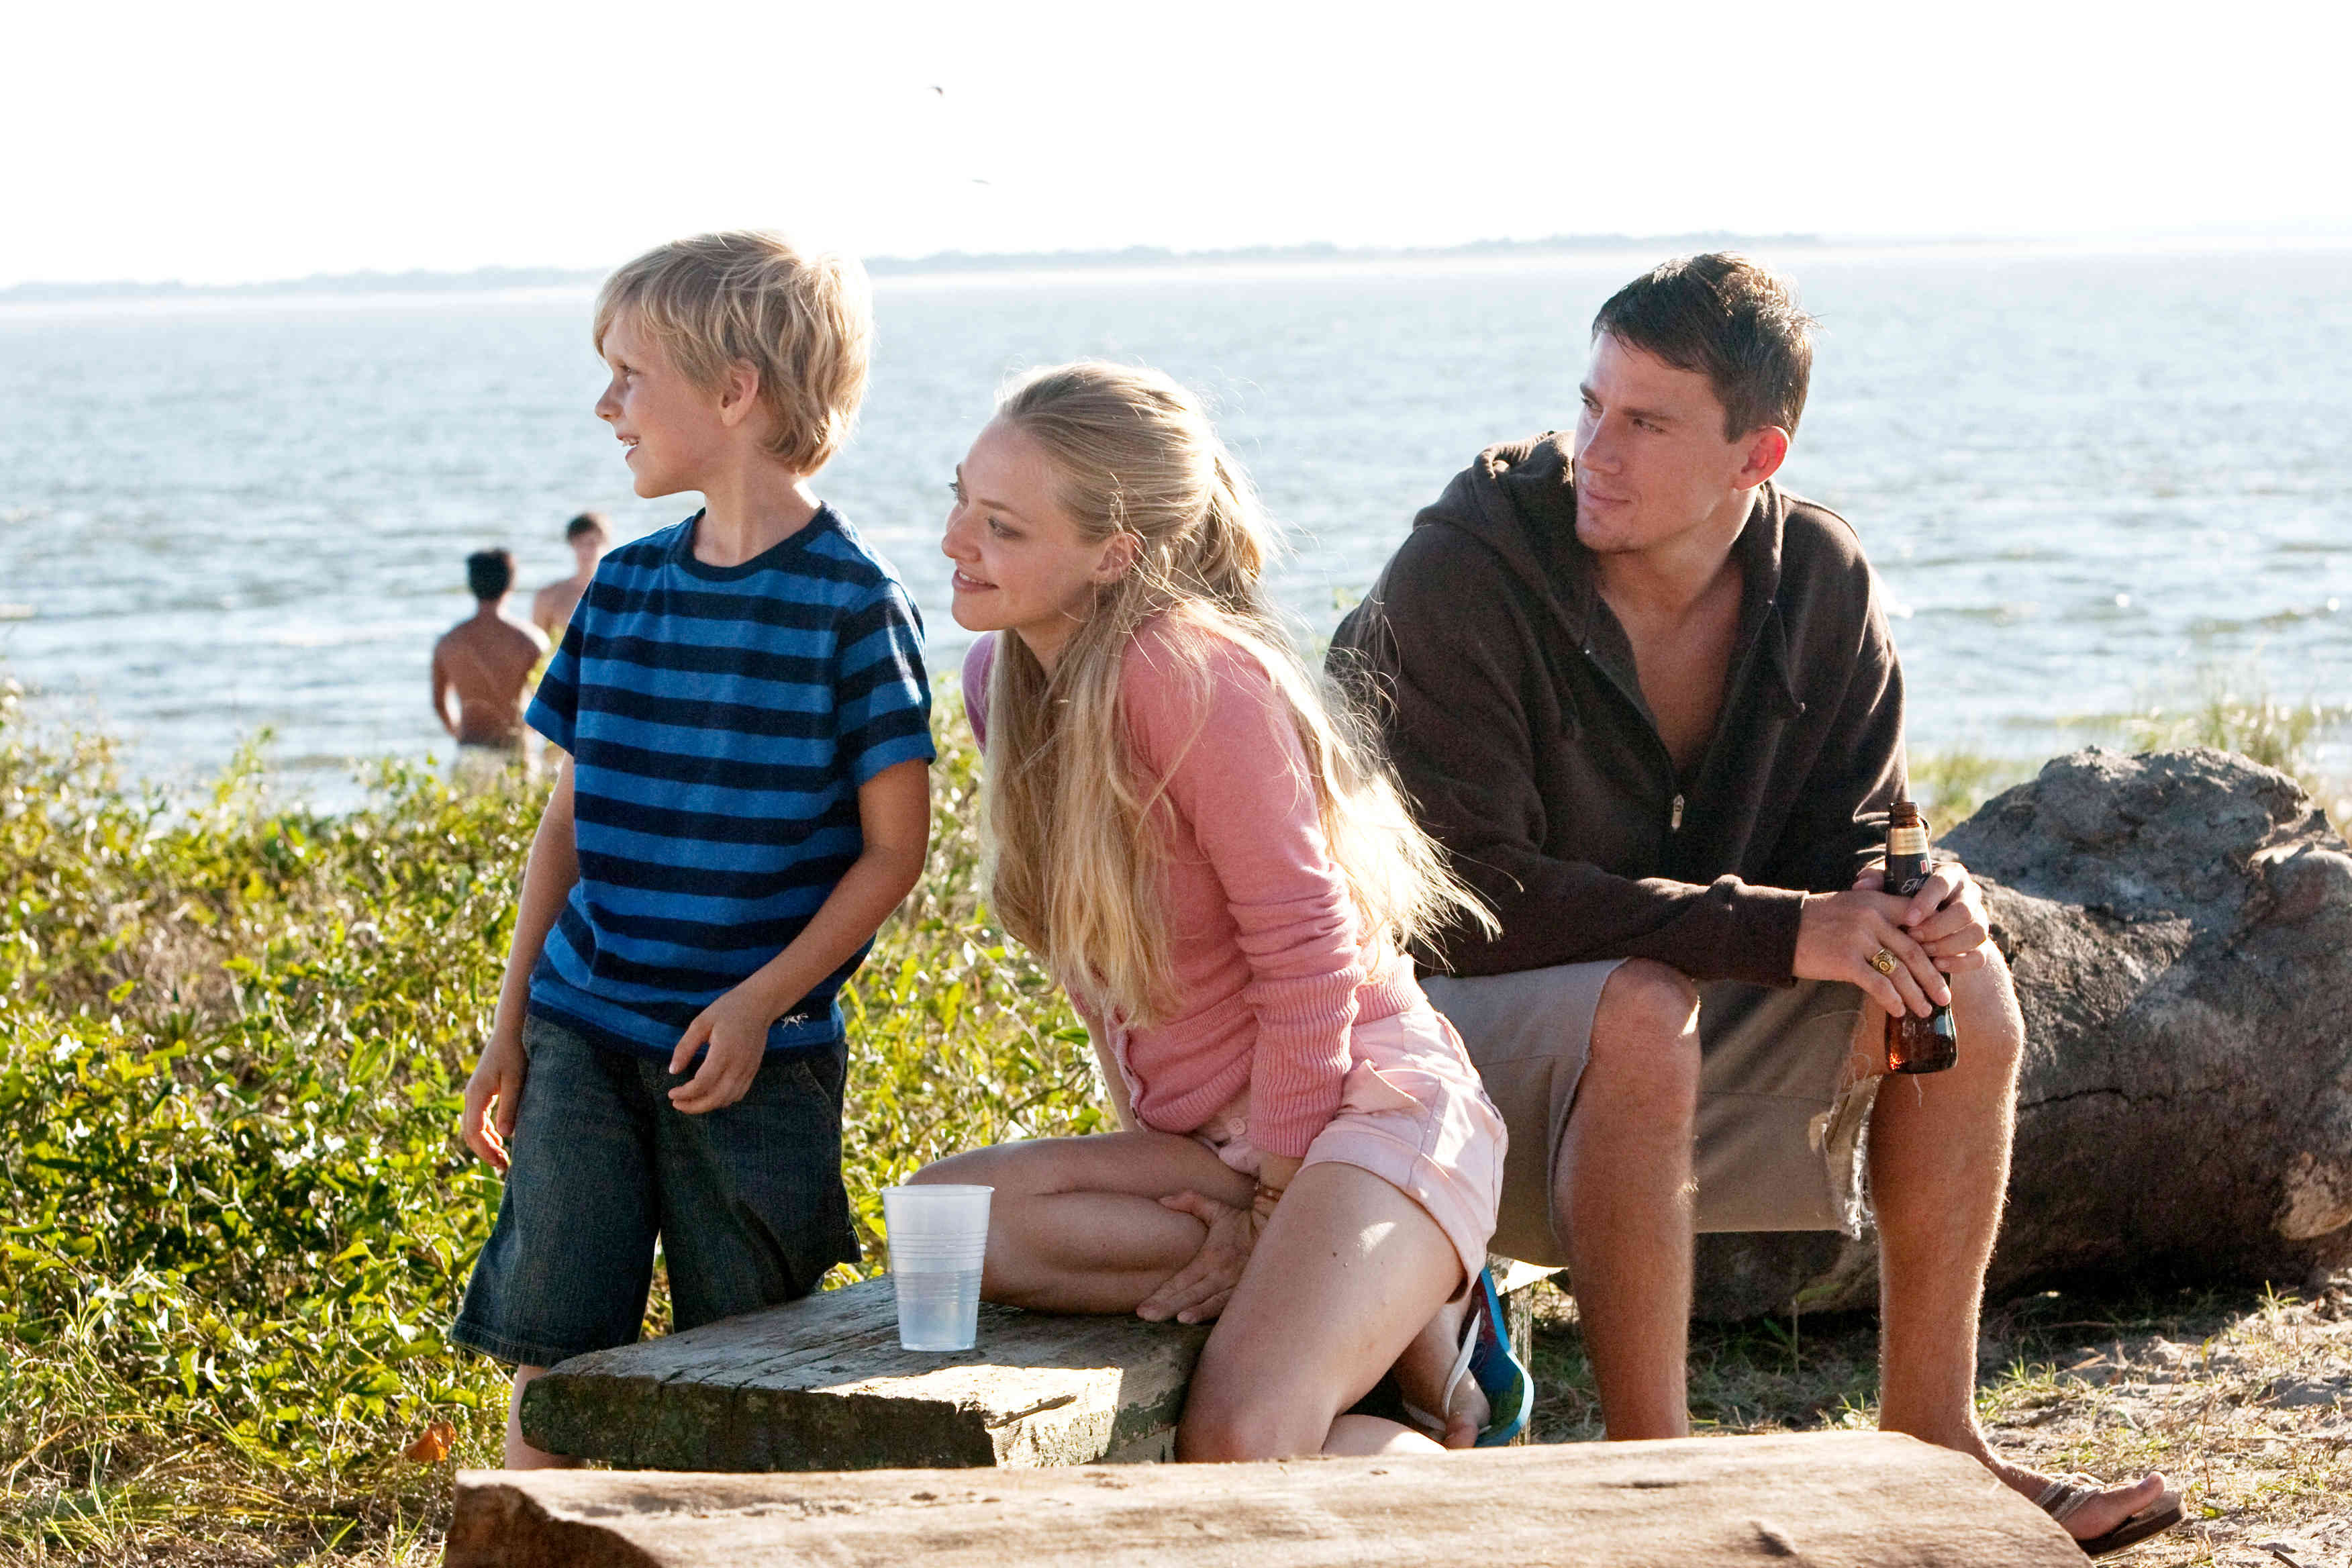 Braeden Reed, Amanda Seyfried and Channing Tatum in Screen Gems' Dear John (2010)